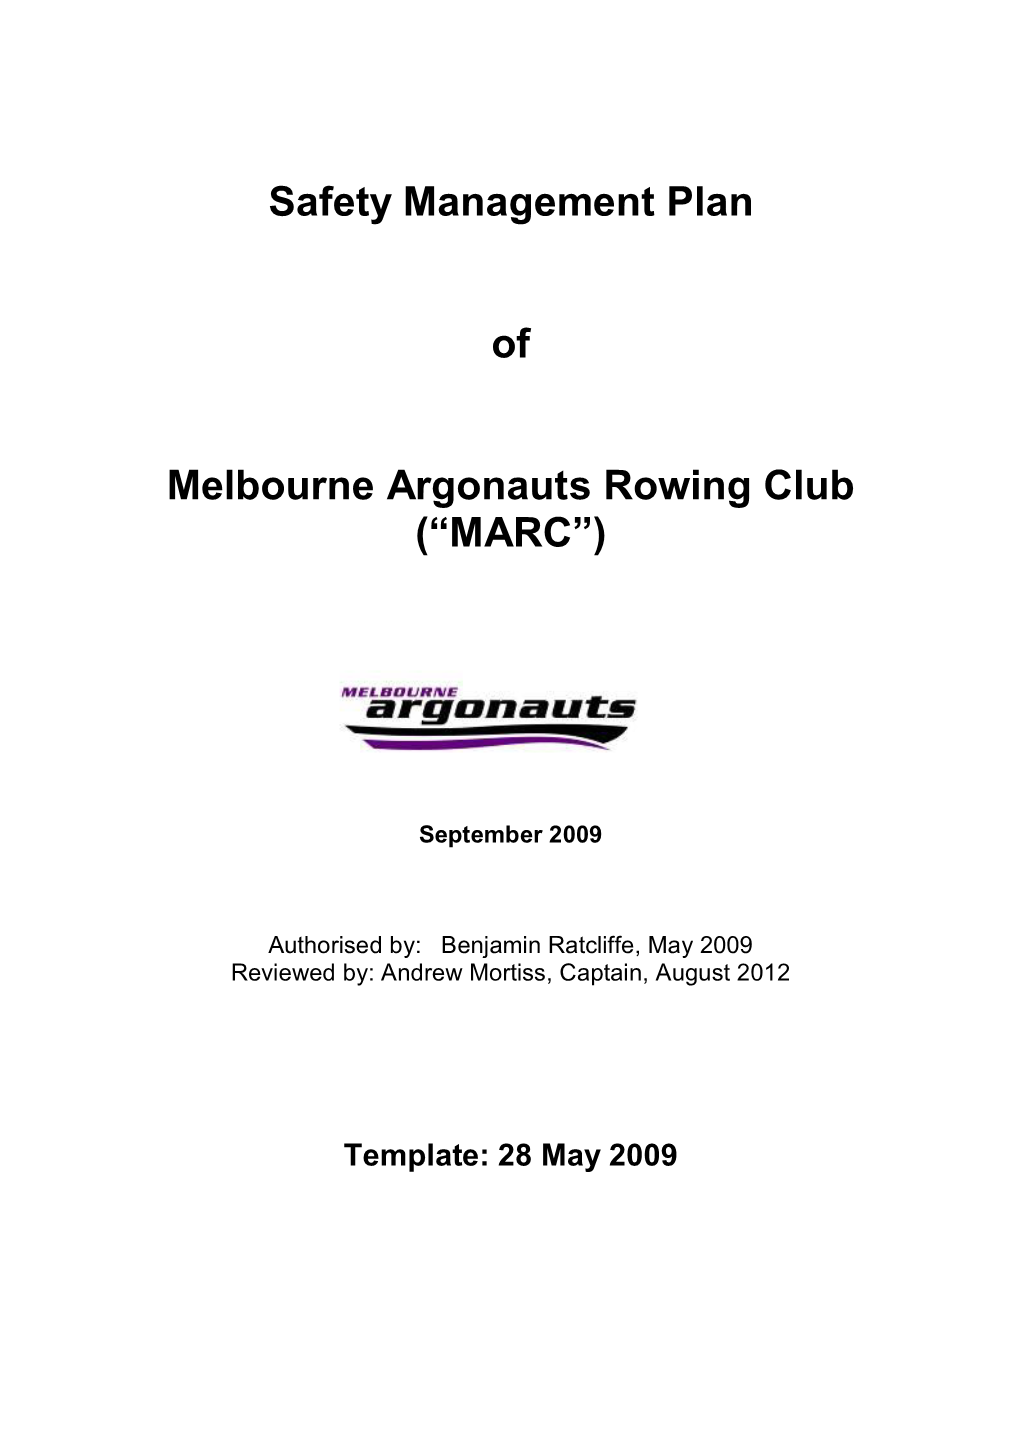 Safety Management Plan of Melbourne Argonauts Rowing Club